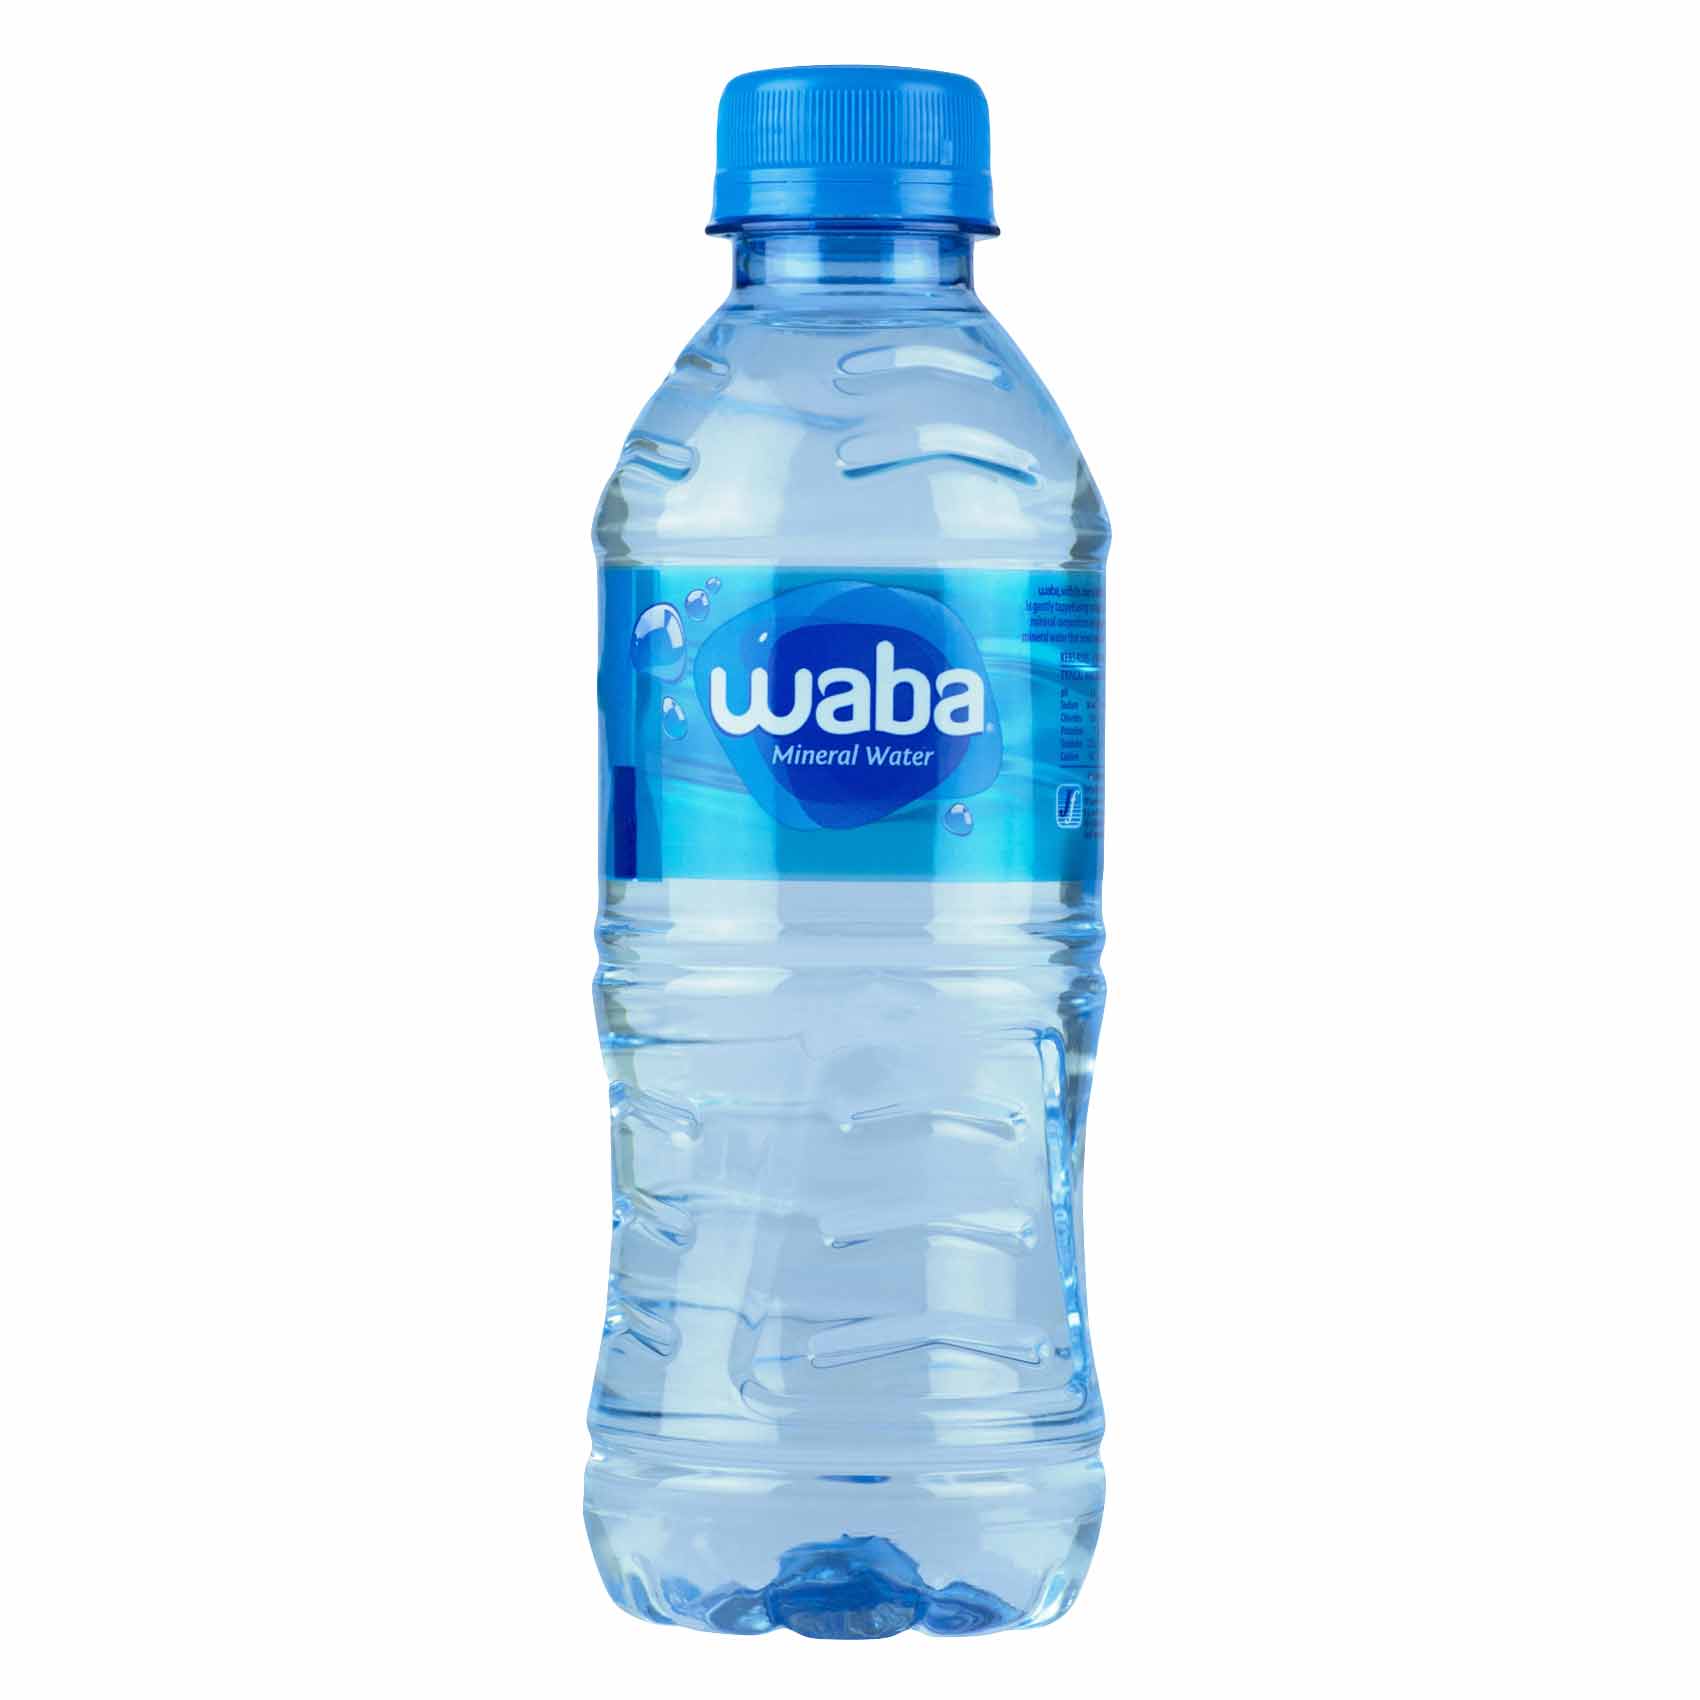 Waba Mineral Water 300ml